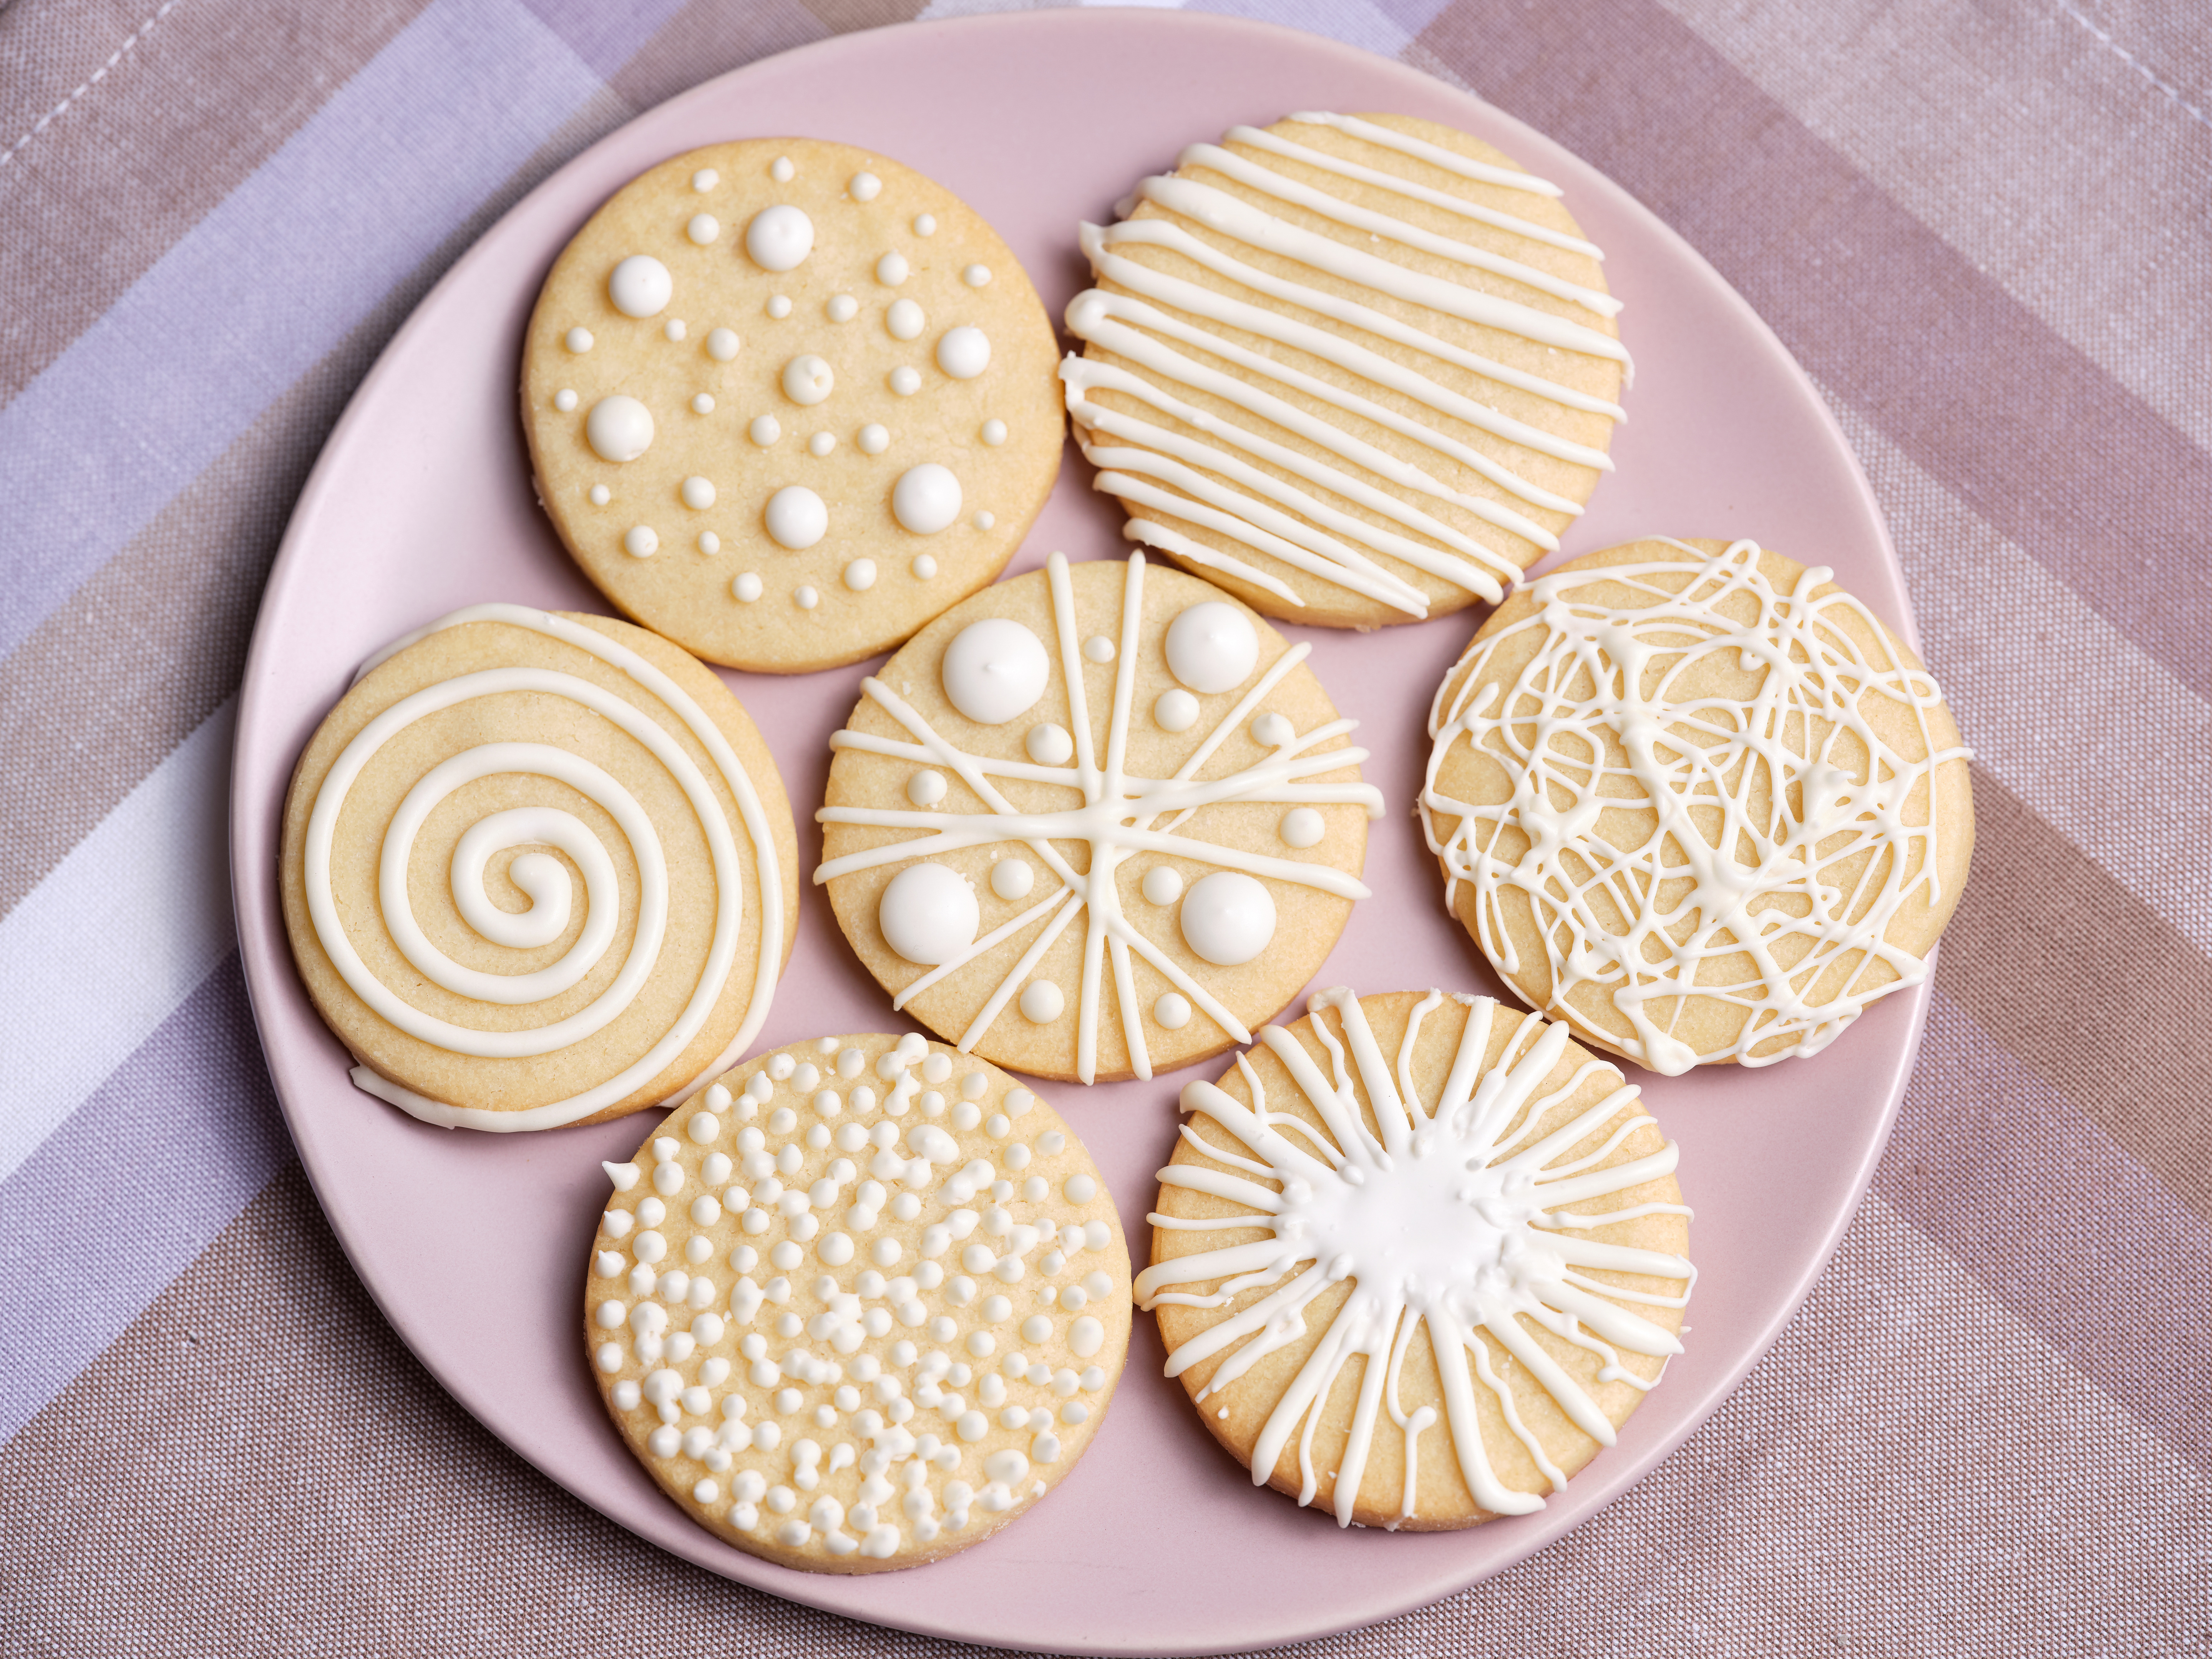 https://www.foodnetwork.com/content/dam/images/food/fullset/2019/9/3/0/FNK_the-best-sugar-cookies-for-decorating_H_s4x3.jpg